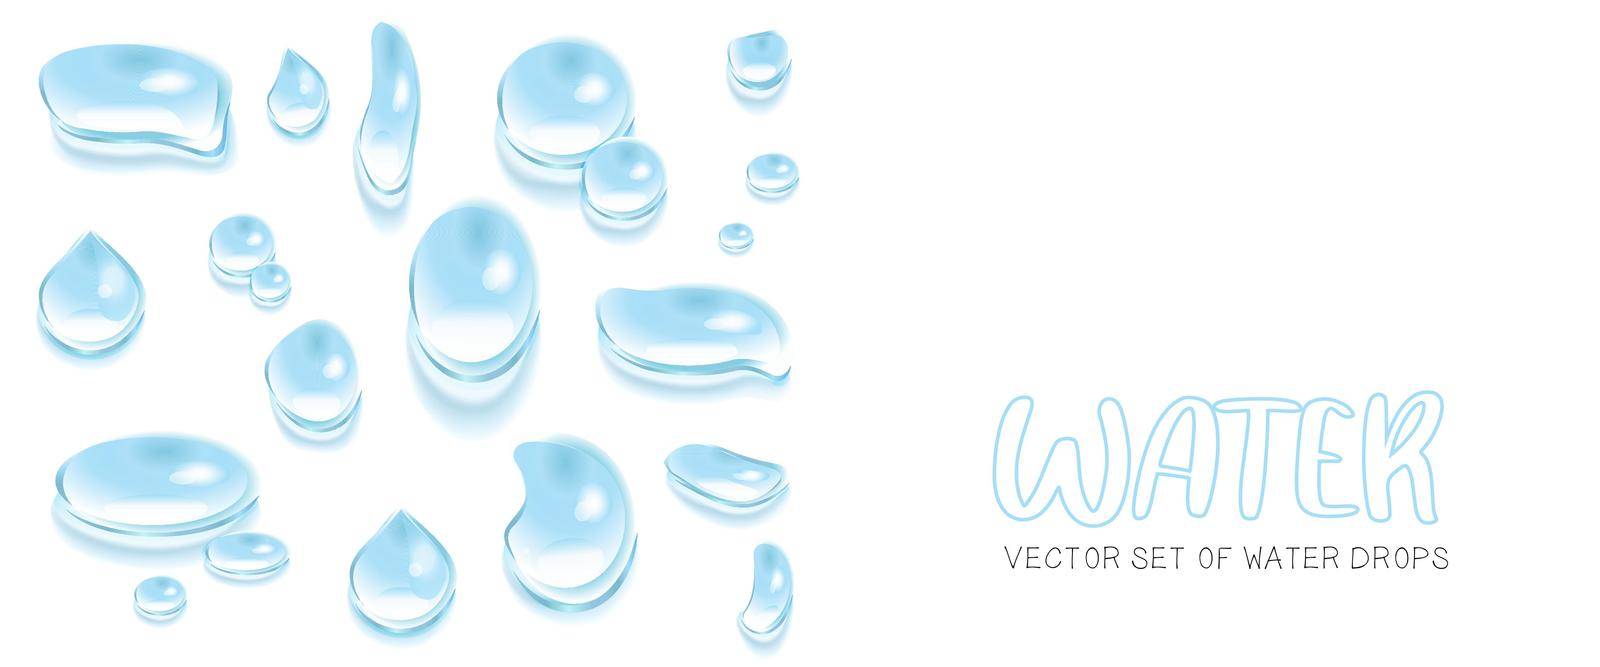 Vector set of water drops  by GALA_art